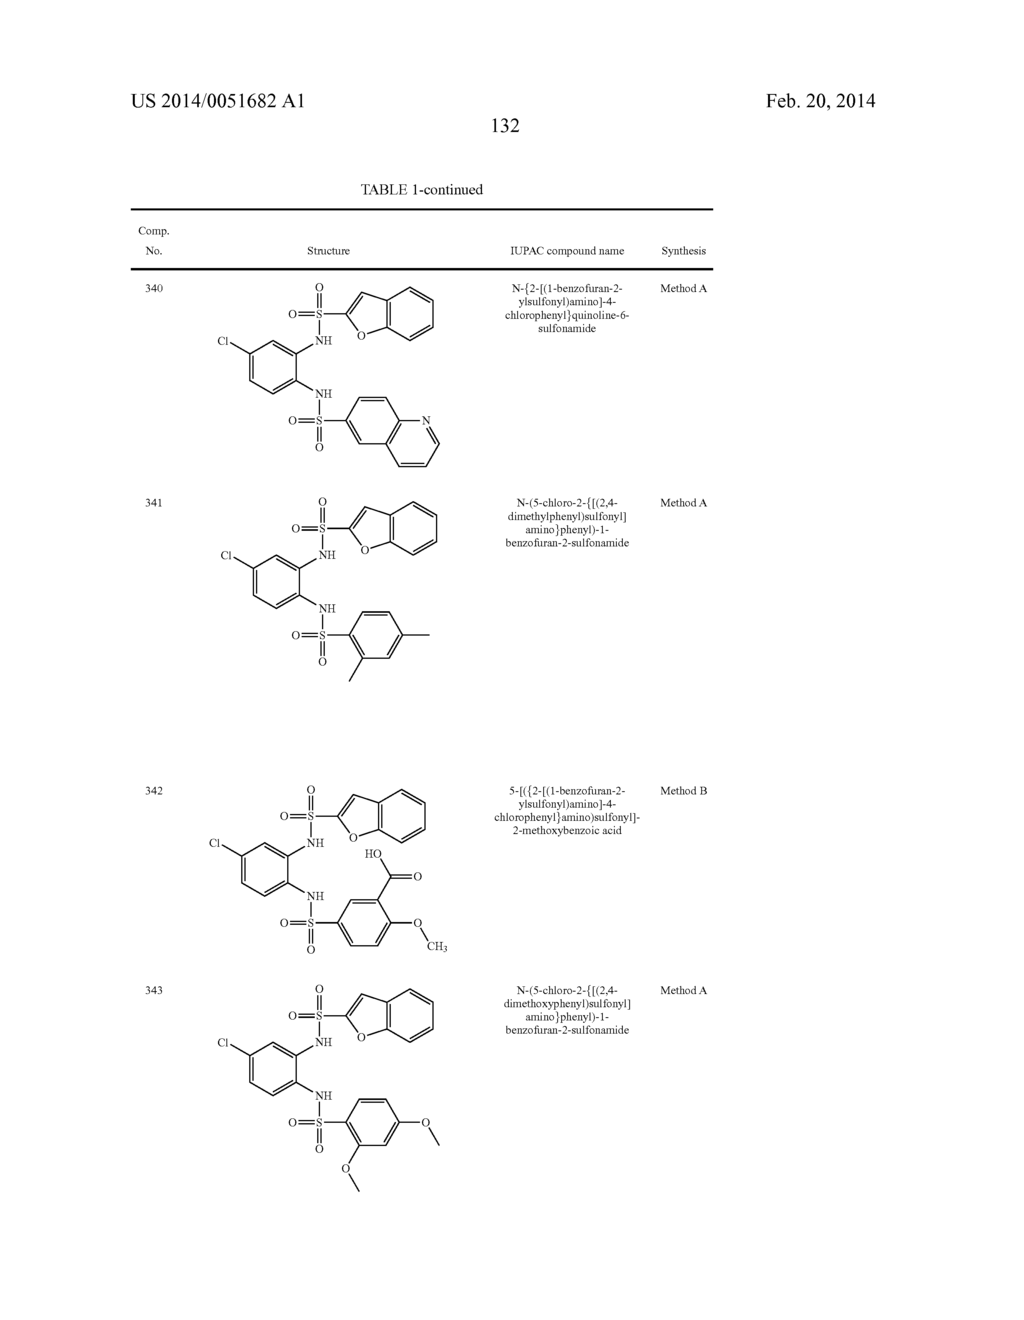 NOVEL 1,2- BIS-SULFONAMIDE DERIVATIVES AS CHEMOKINE RECEPTOR MODULATORS - diagram, schematic, and image 133